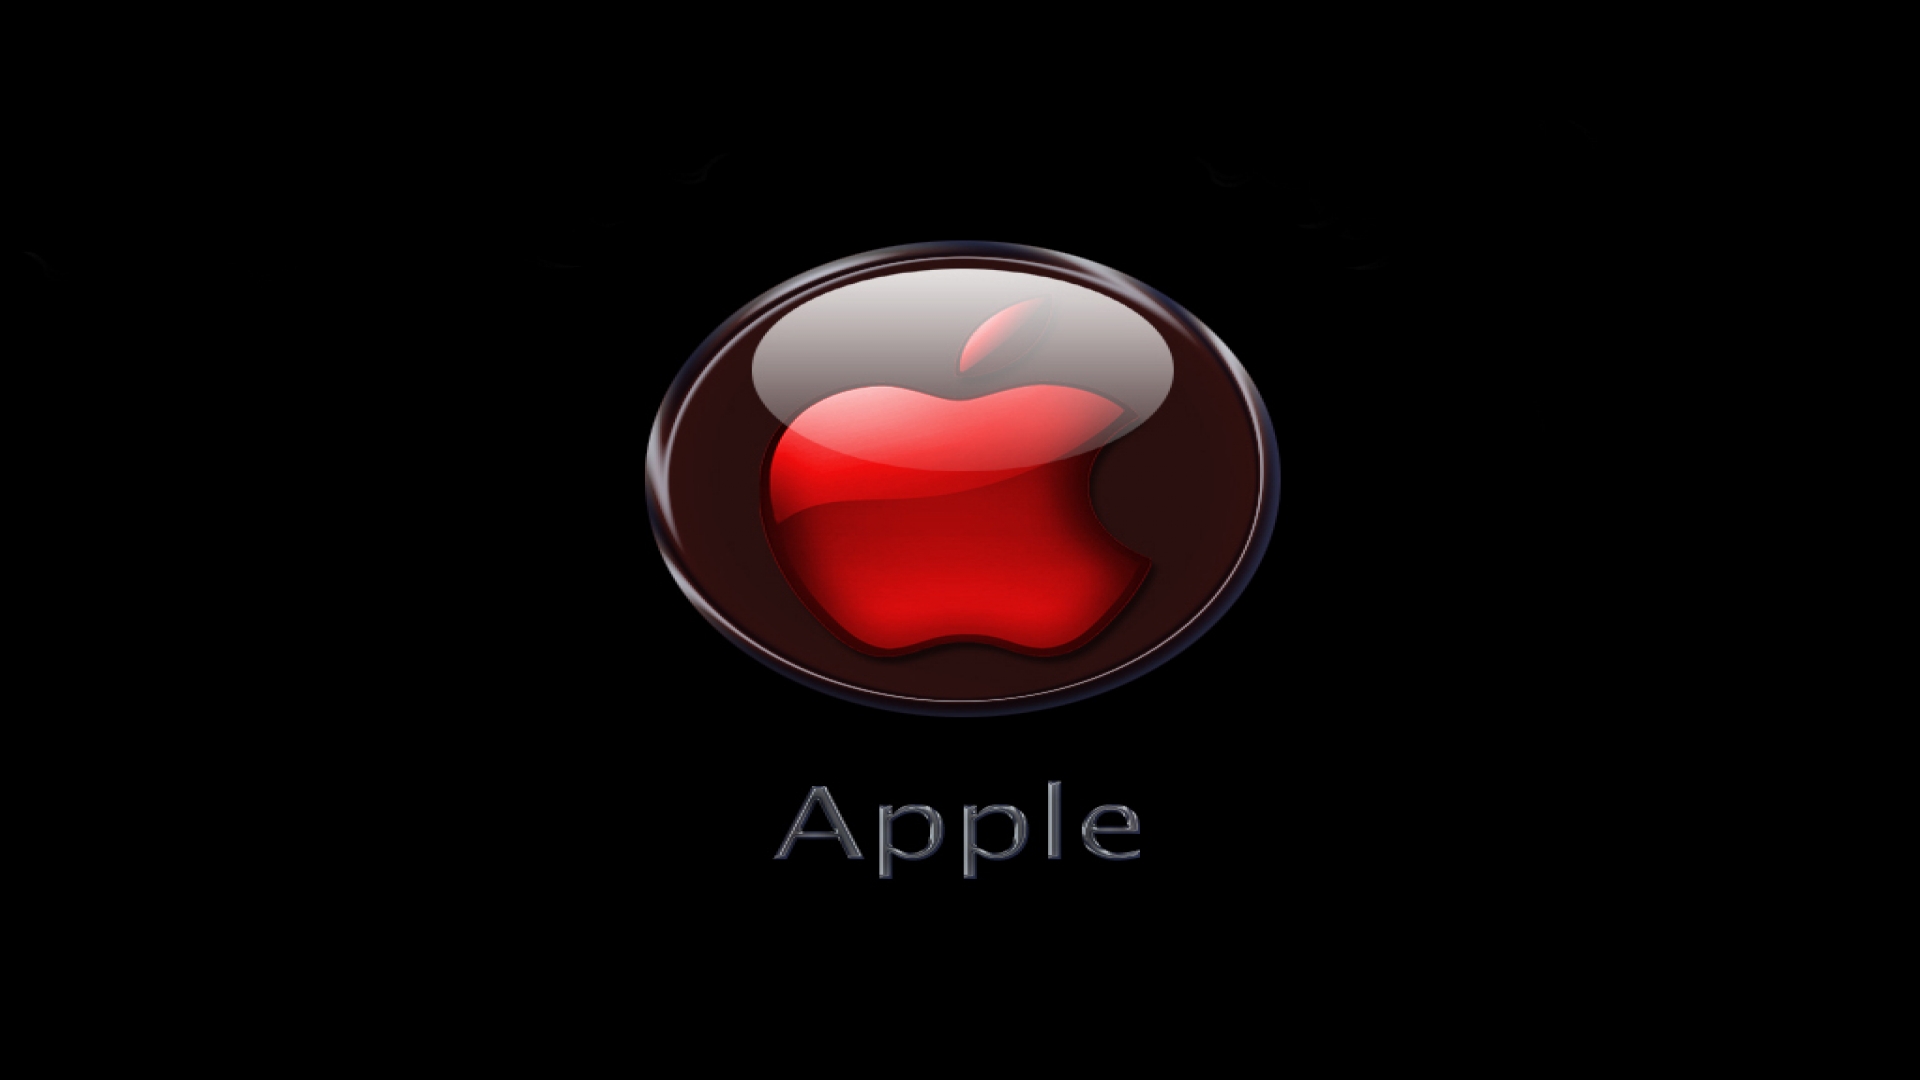 Cool Red Apple Logo Wallpaper Download